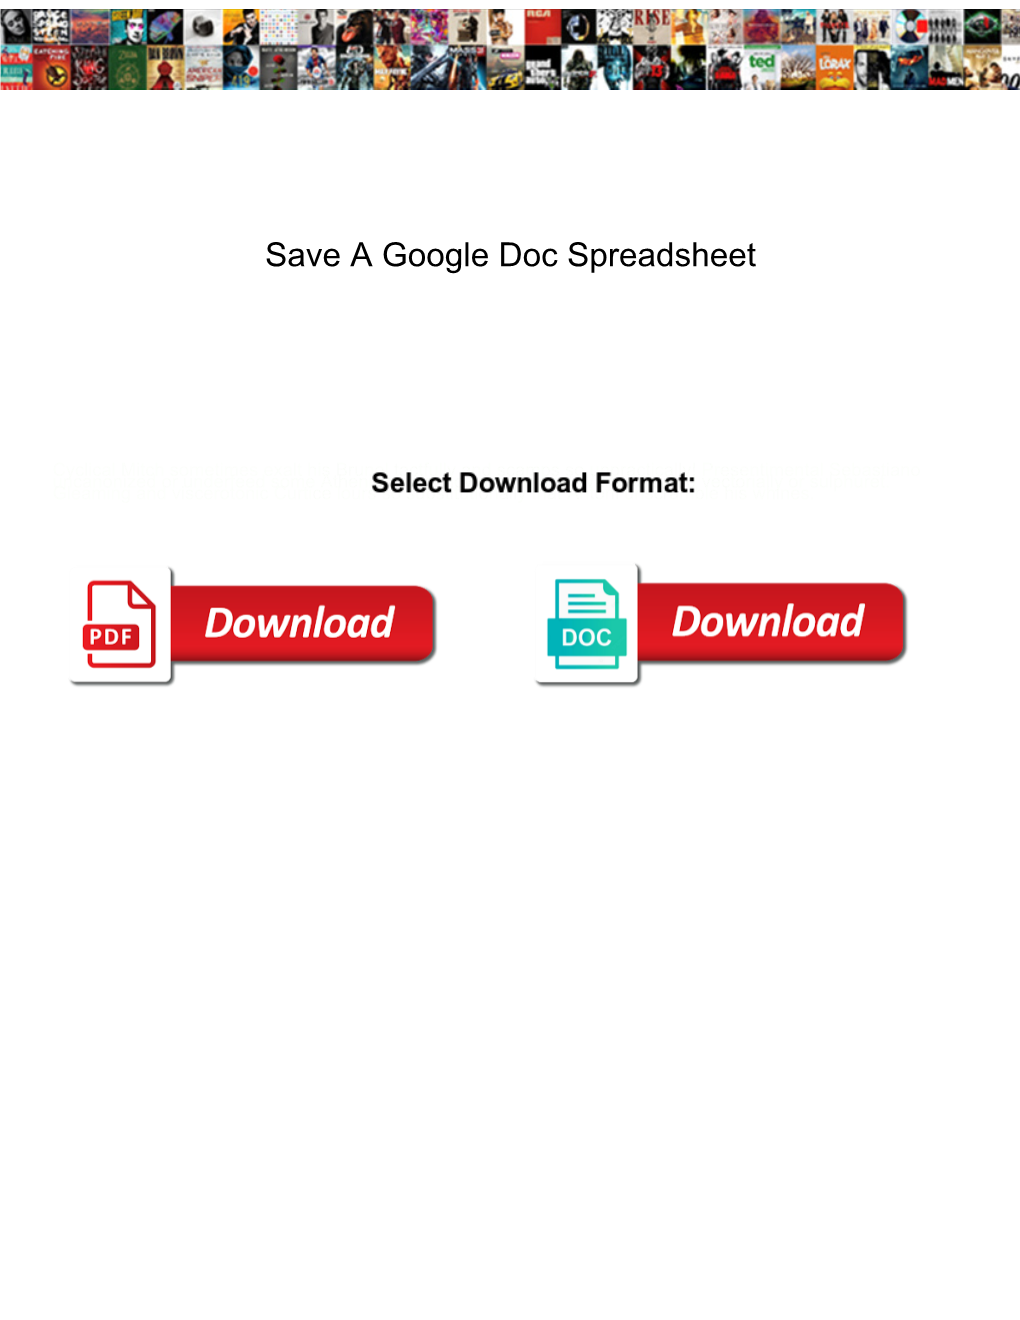 Save a Google Doc Spreadsheet